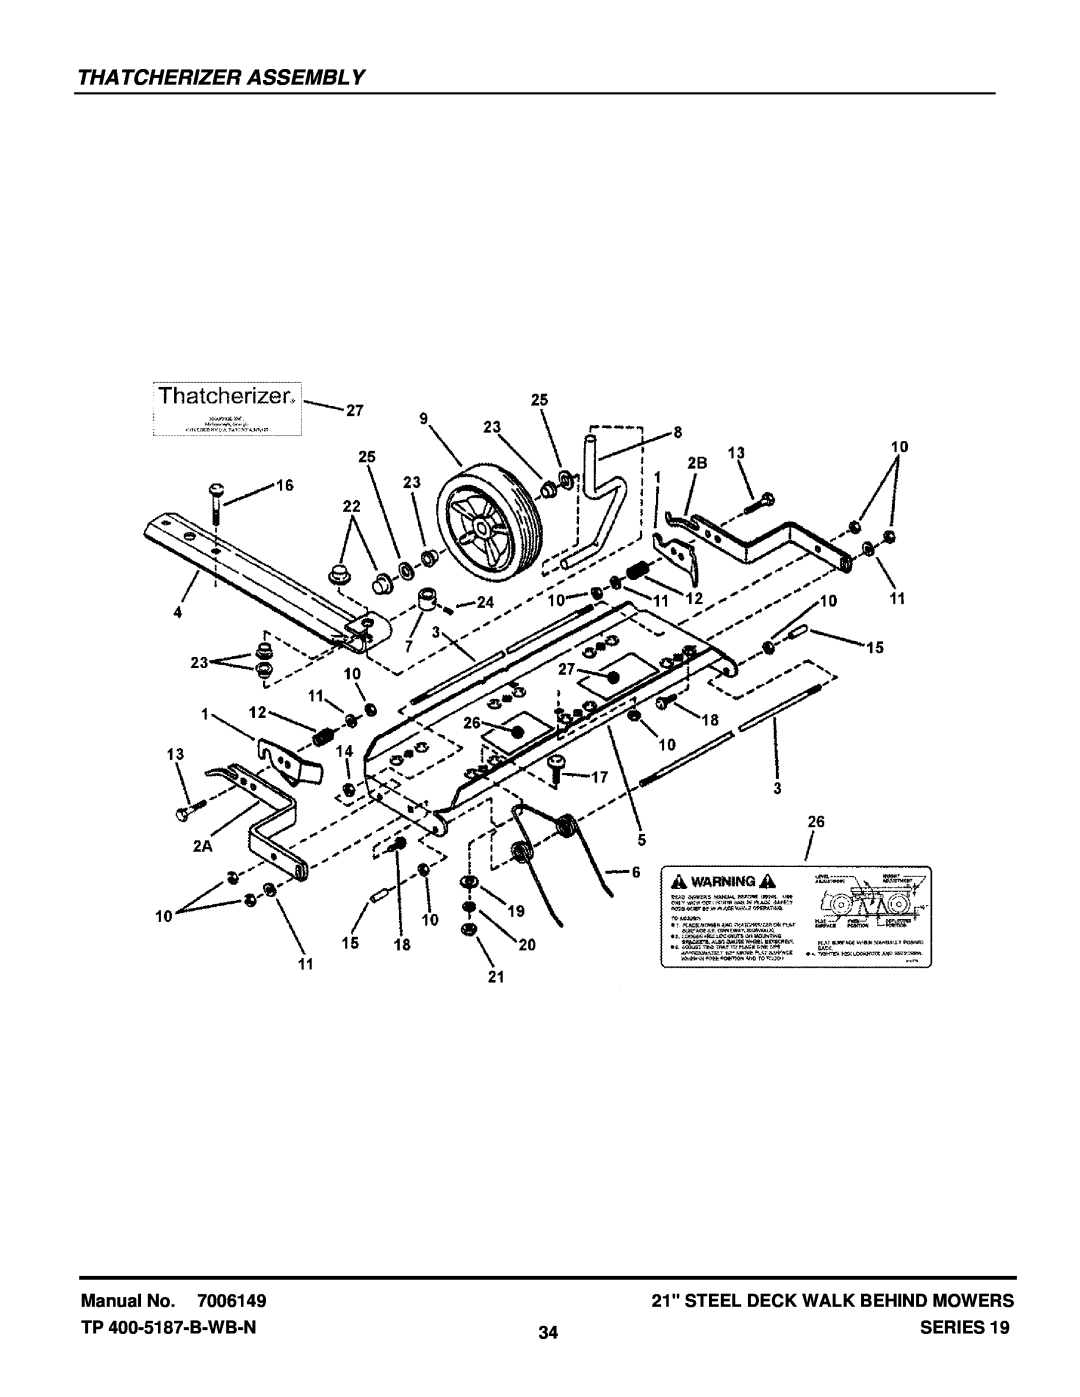 Snapper SERIES 19 manual Thatcherizer Assembly, Steel Deck Walk Behind Mowers, TP 400-5187-B-WB-N, Series 